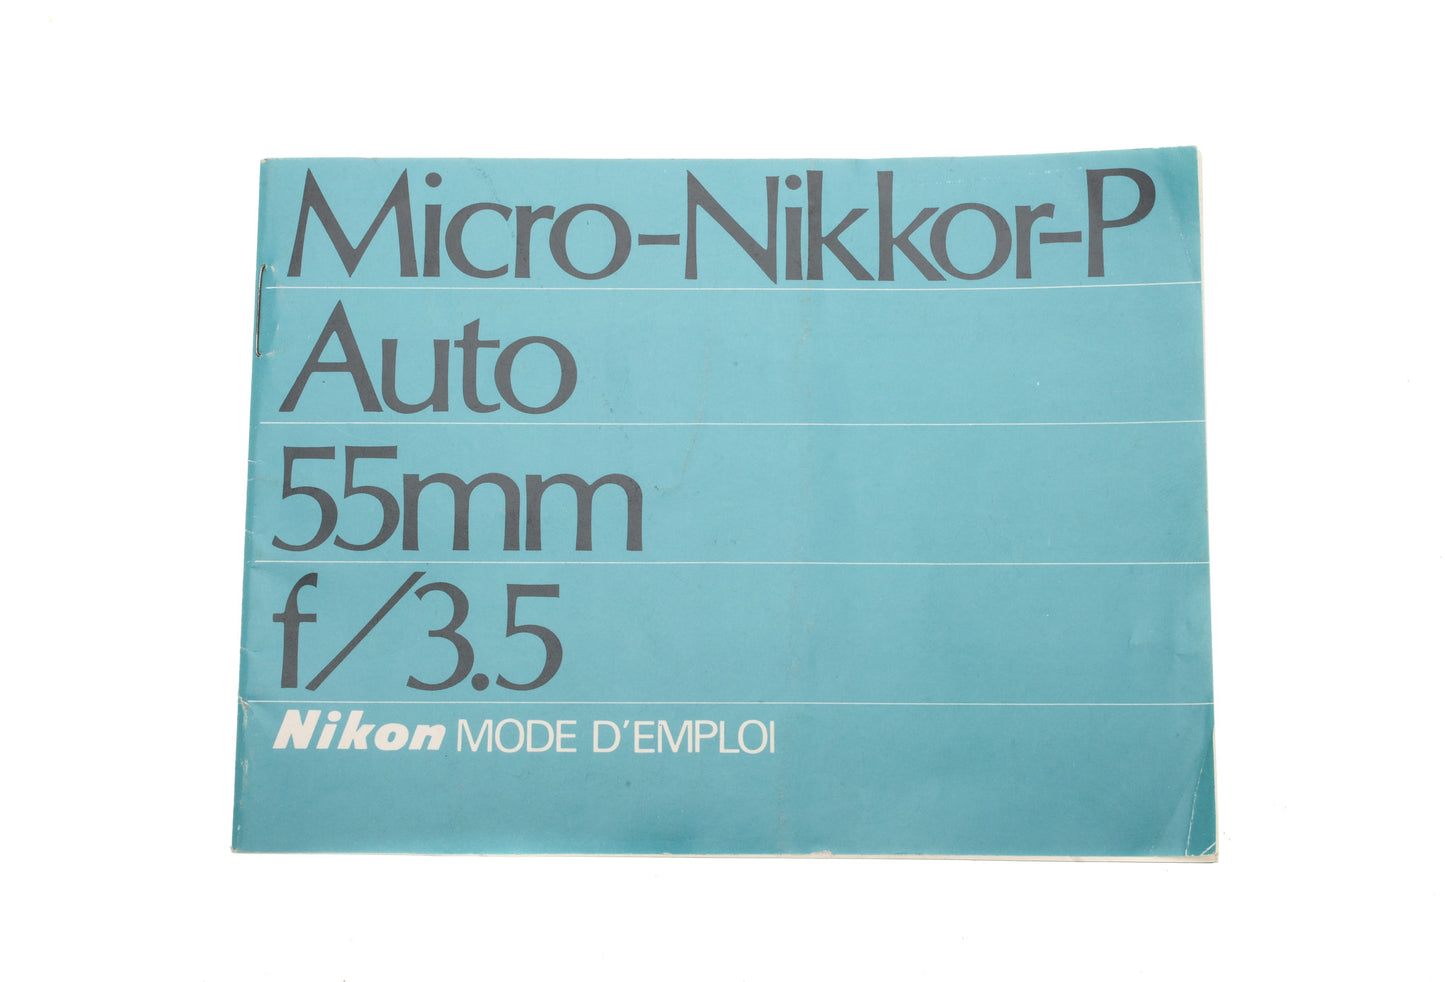 Nikon Micro-Nikkor-P Auto 55mm f/3.5 Instructions - Accessory